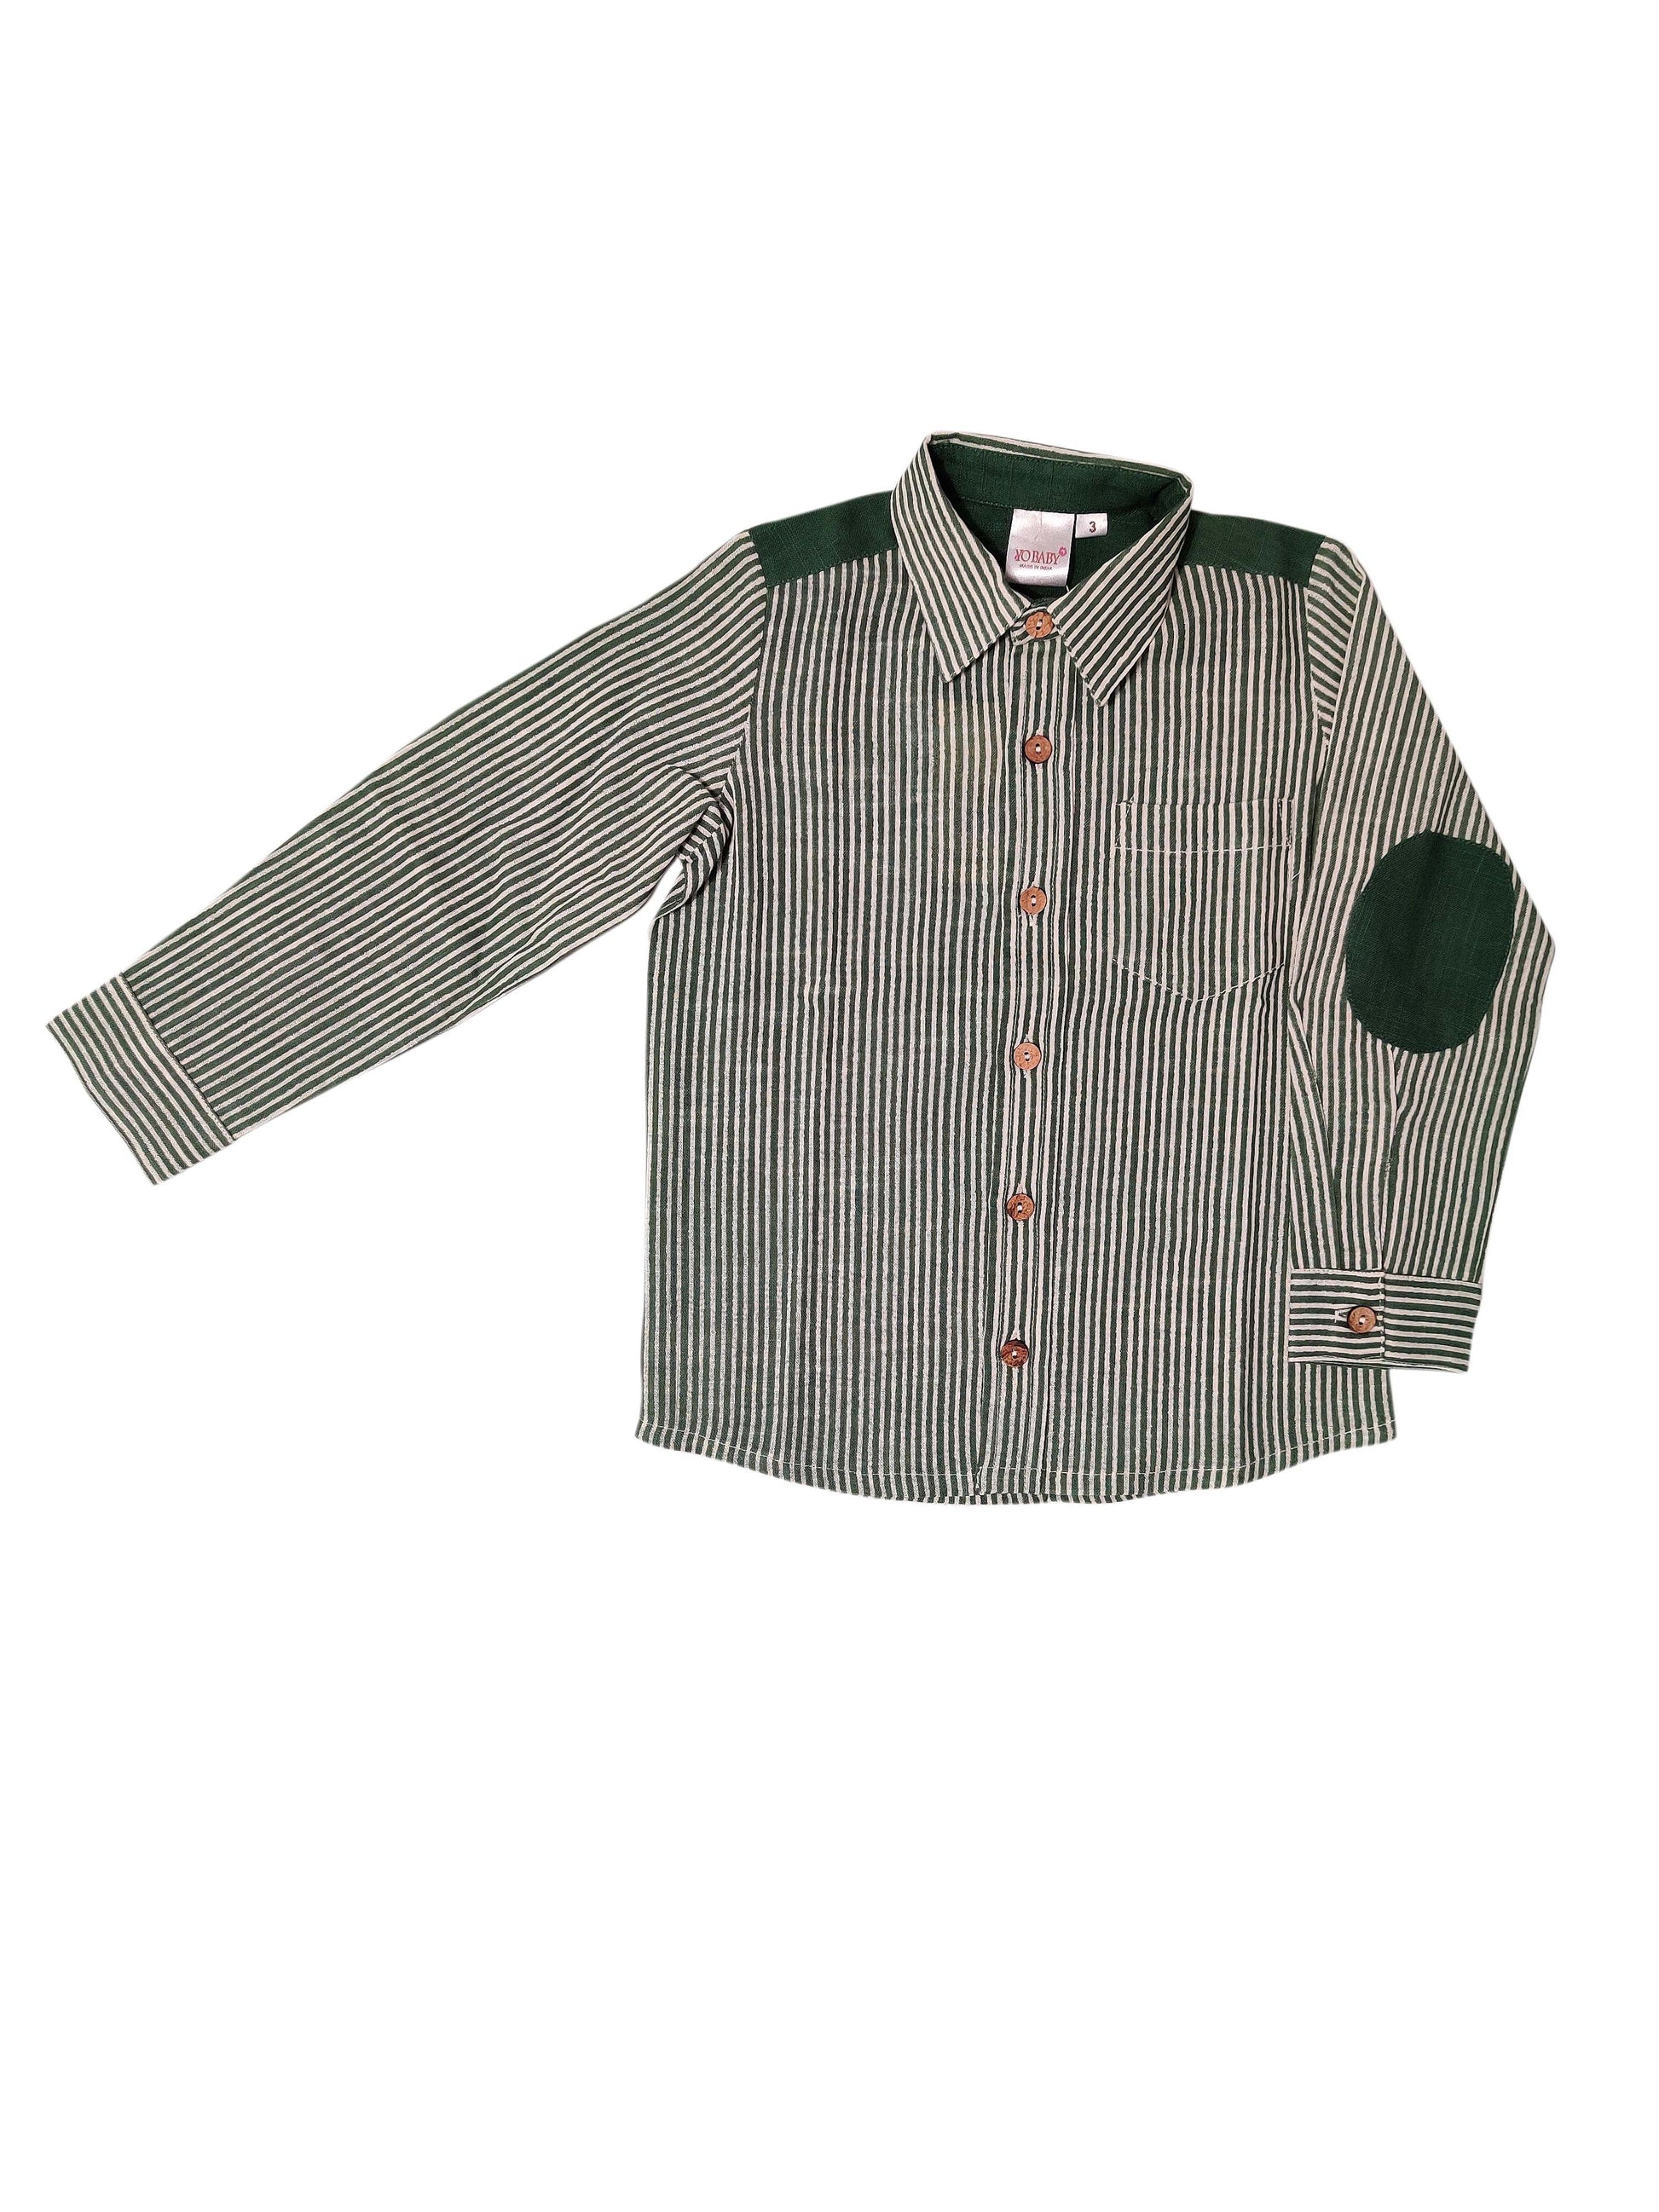 Patch Shirt - Striped Green YB1962 YOBABY